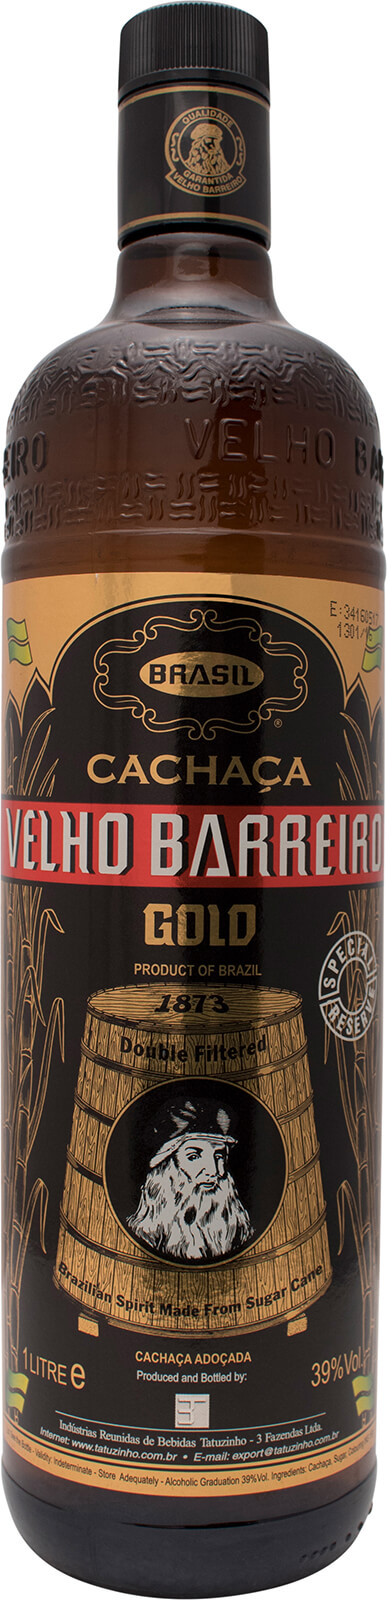 Gold Barreiro Velho 1 Cachaca Jahre) 39% Liter (3